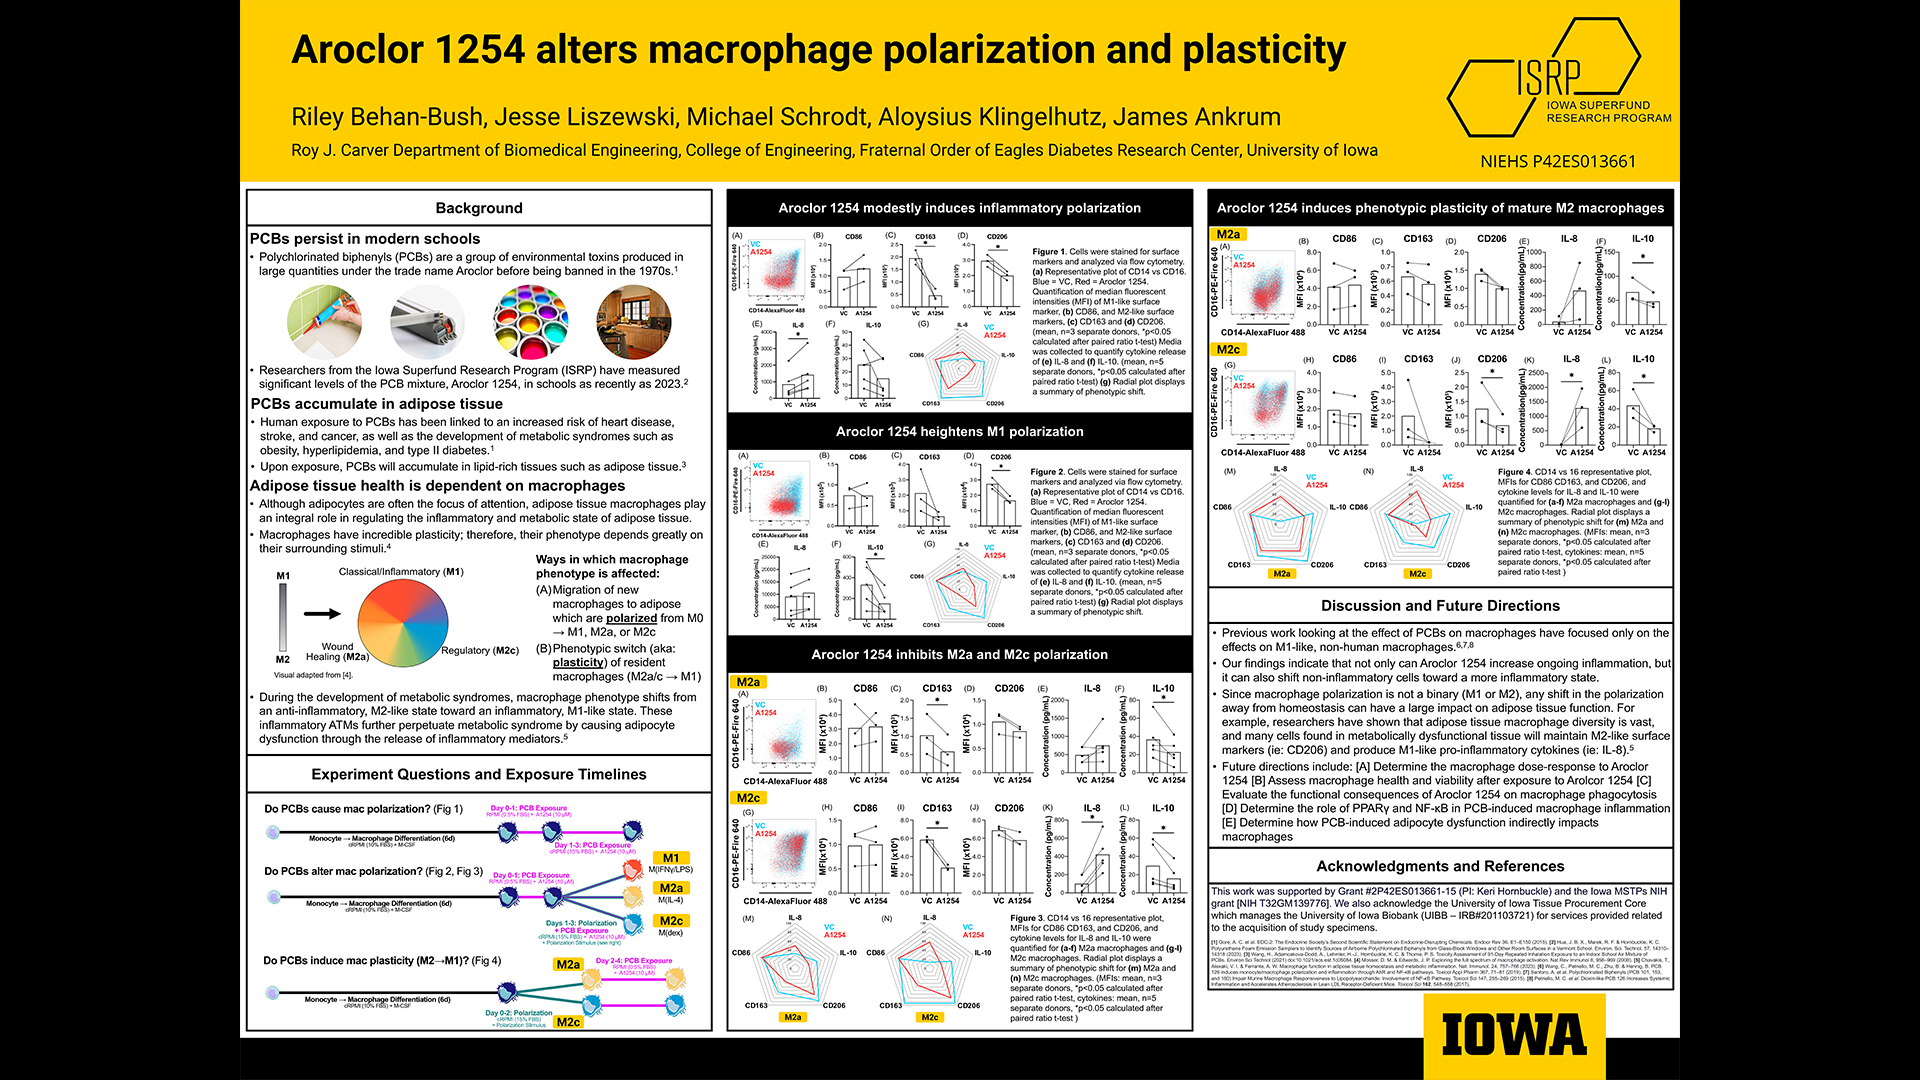 Behan-Bush: Aroclor 1254 alters macrophage polarization and plasticity